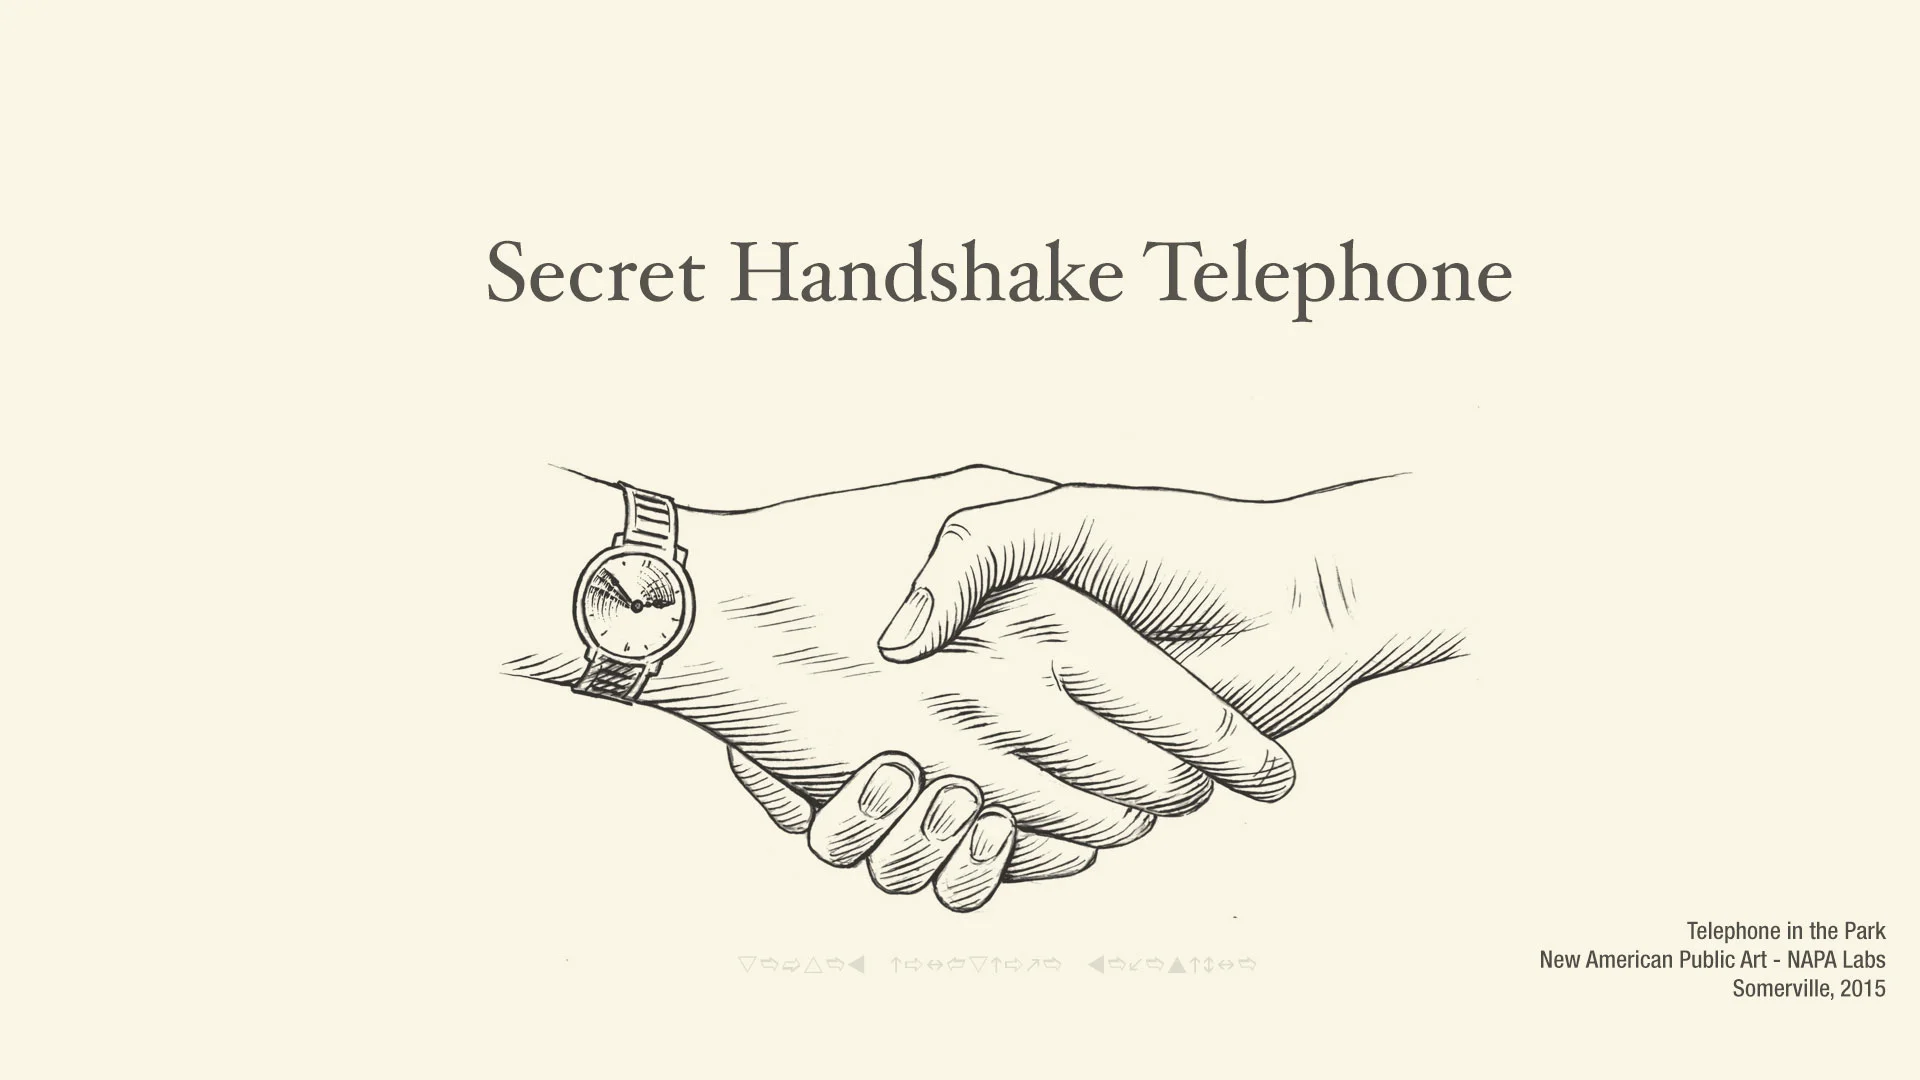 Secret Handshake Telephone on Vimeo